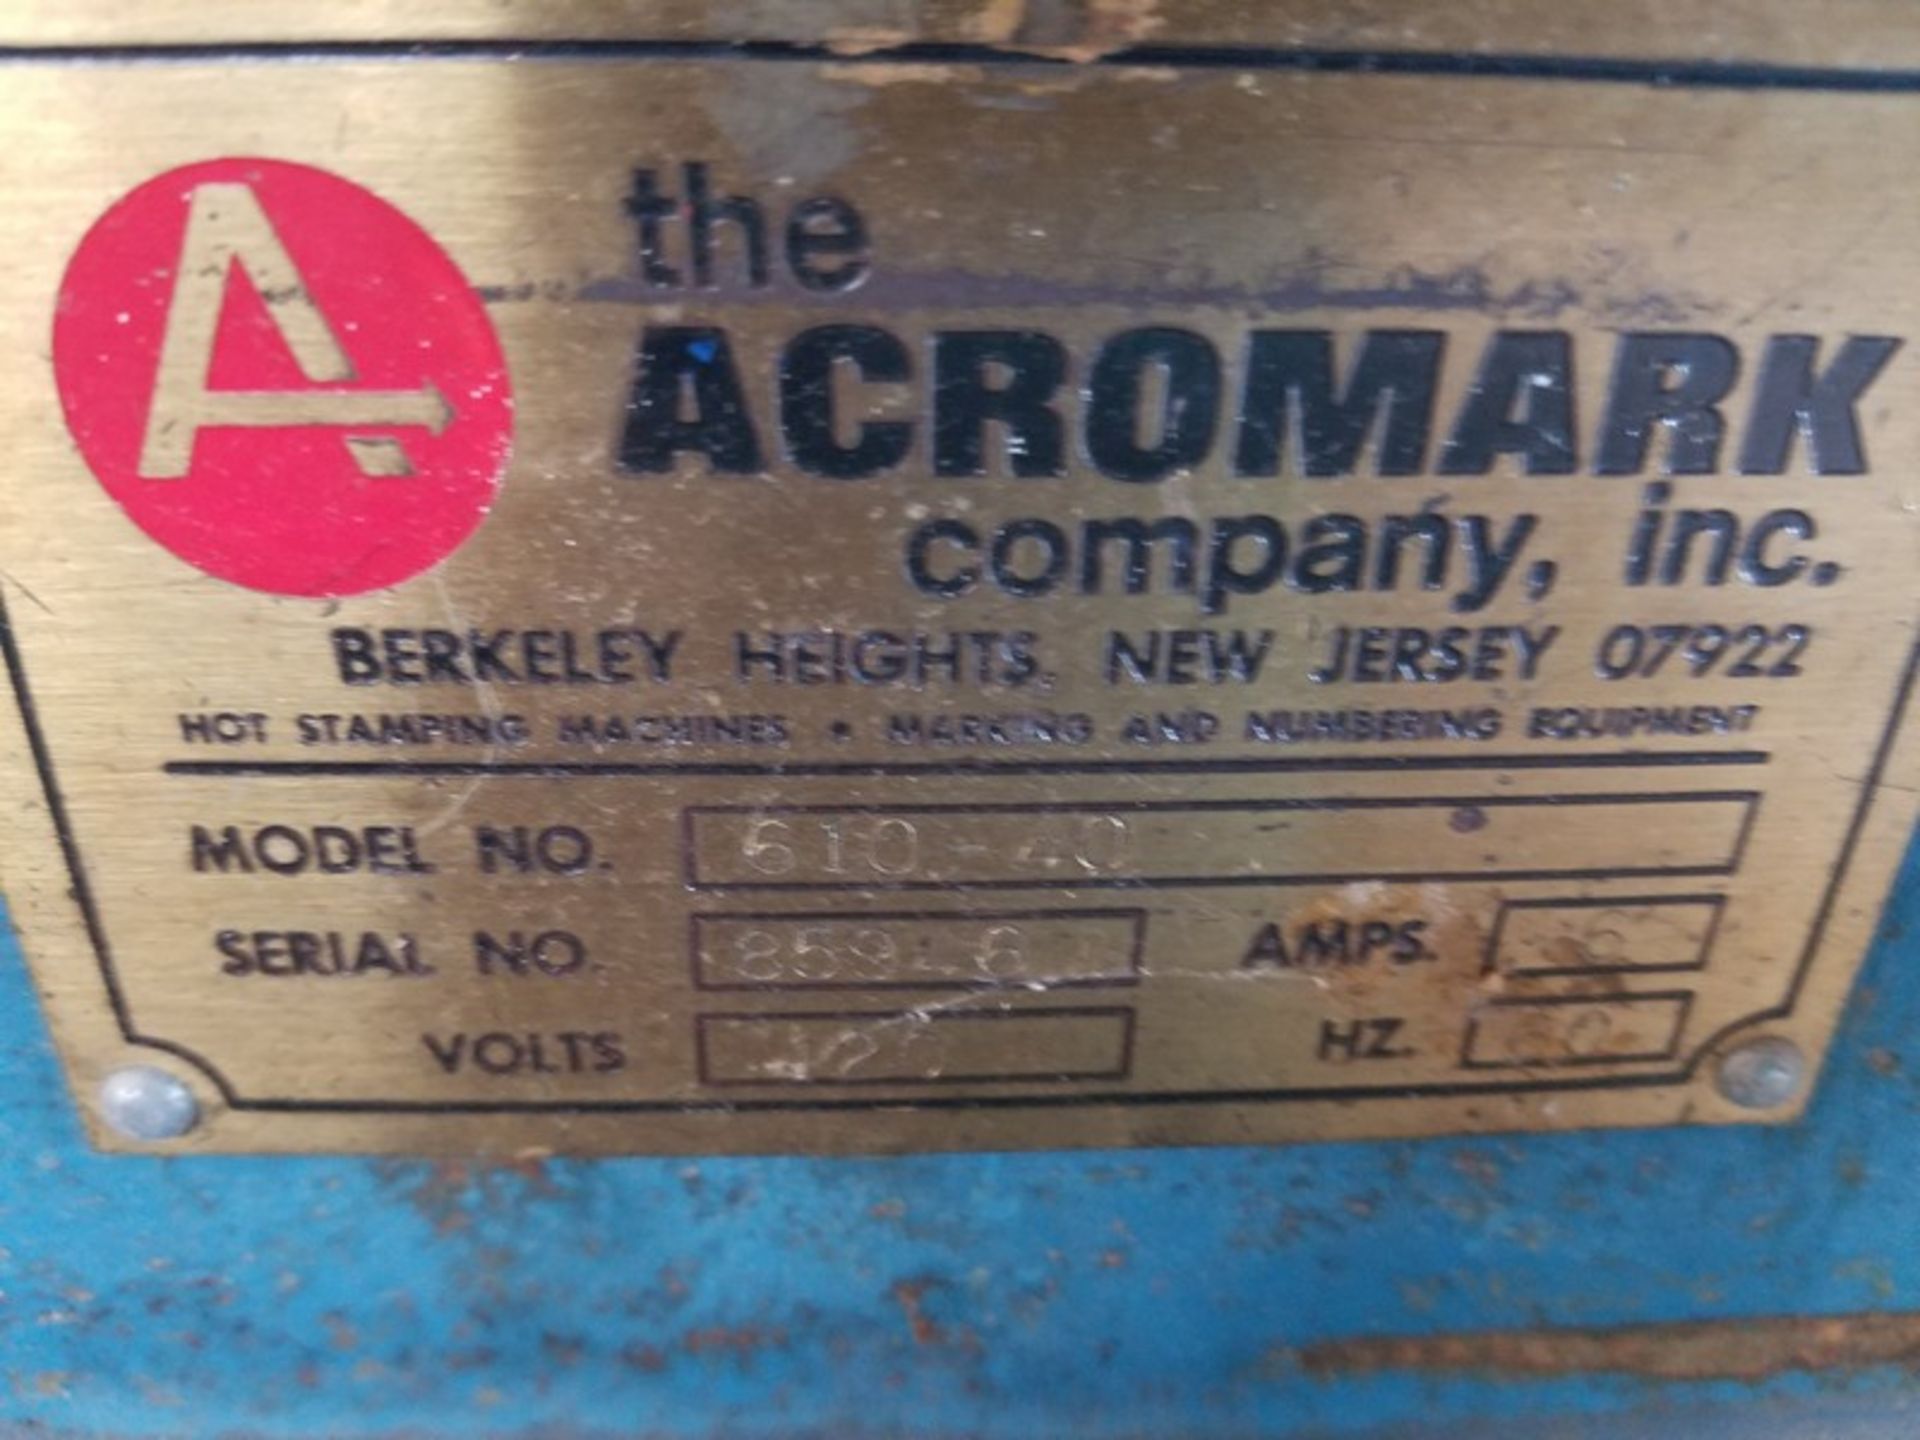 Aeromark 610-40 hot foil stamping press, serial # 85946, volt 120, plat size: 7 x 8 (Handling, - Image 5 of 5